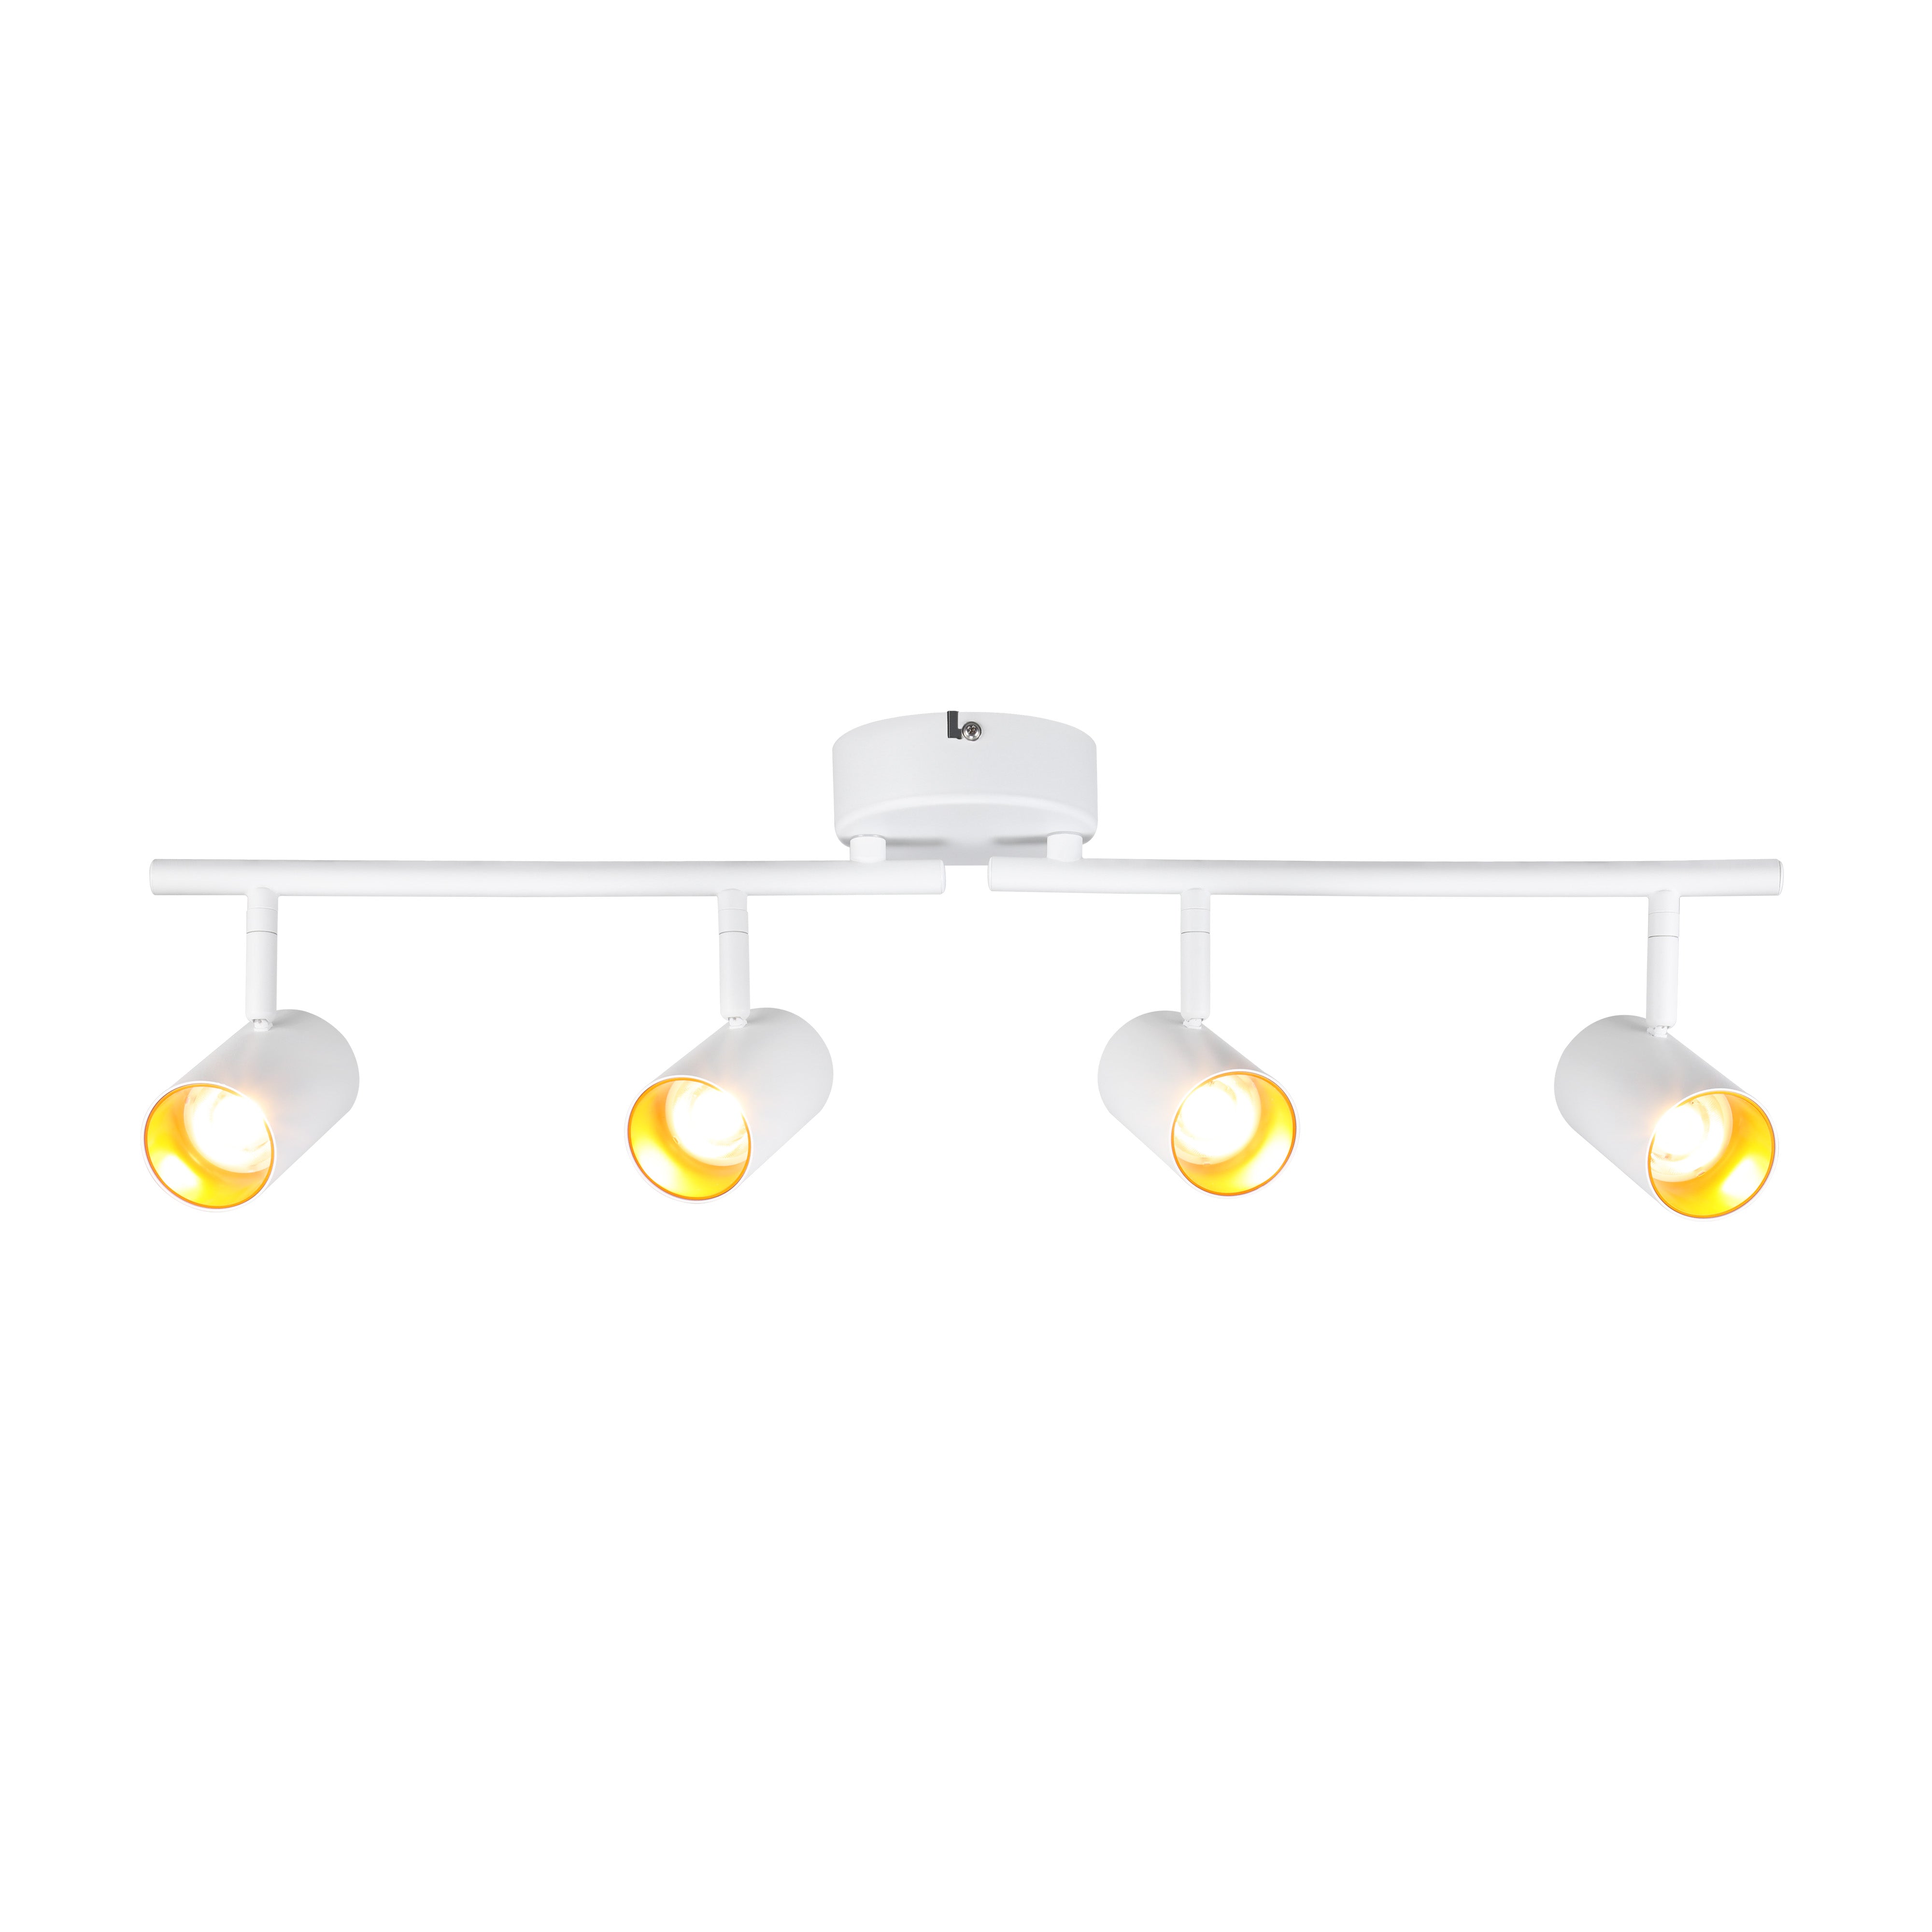 LeonLite theBeam™ Plus 4-Heads LED Ceiling Spot Lights - White - Adjustable CCT